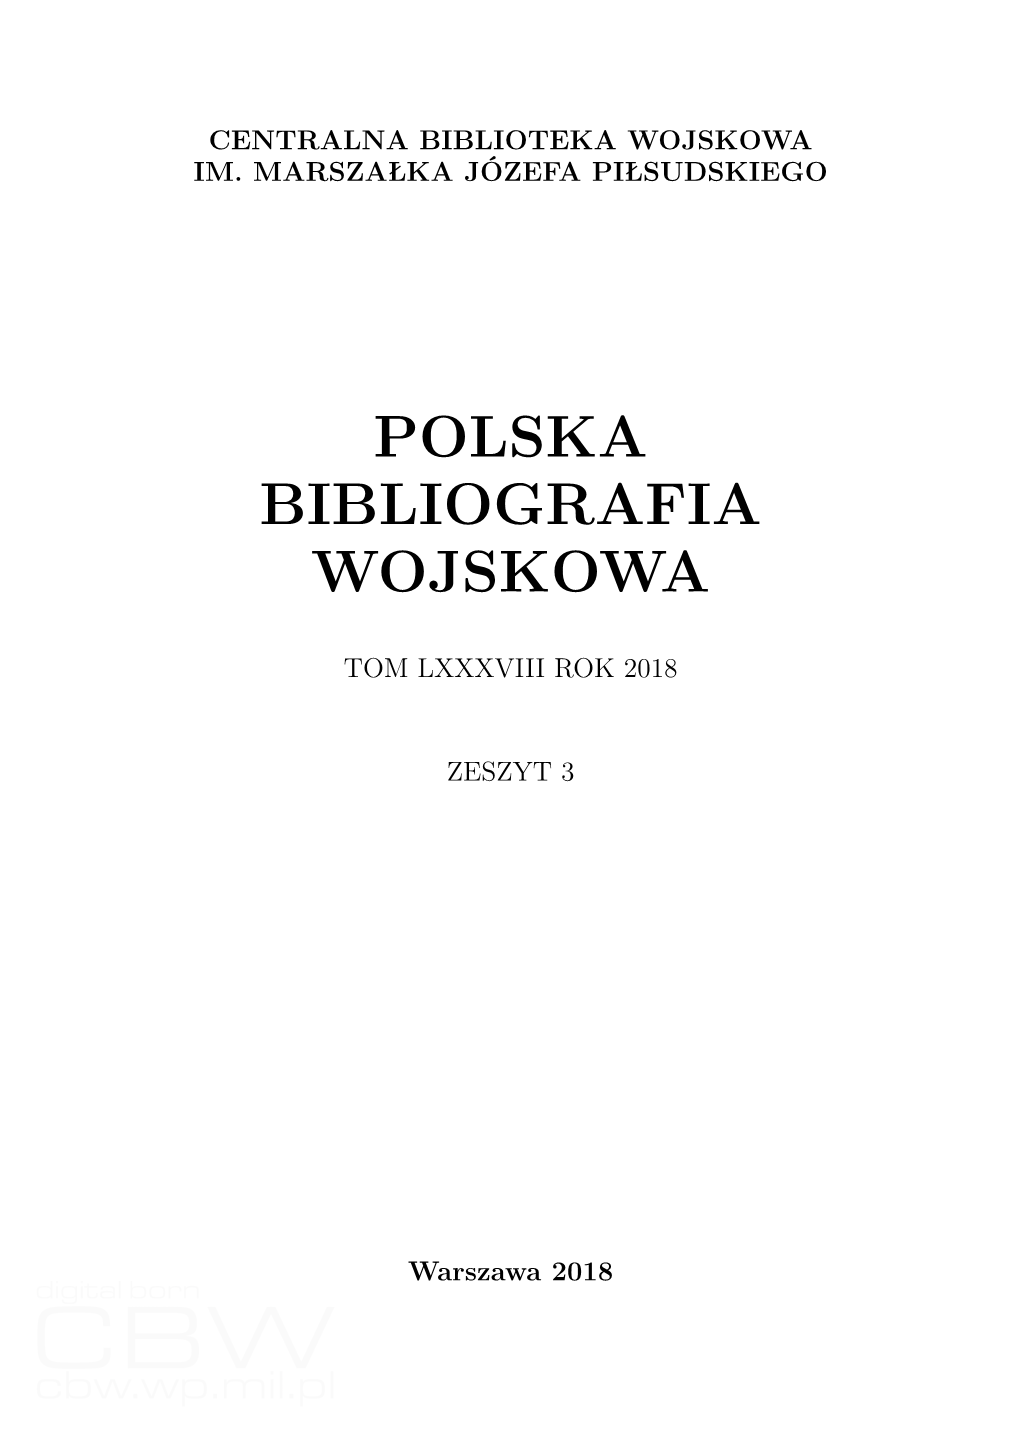 Polska Bibliografia Wojskowa